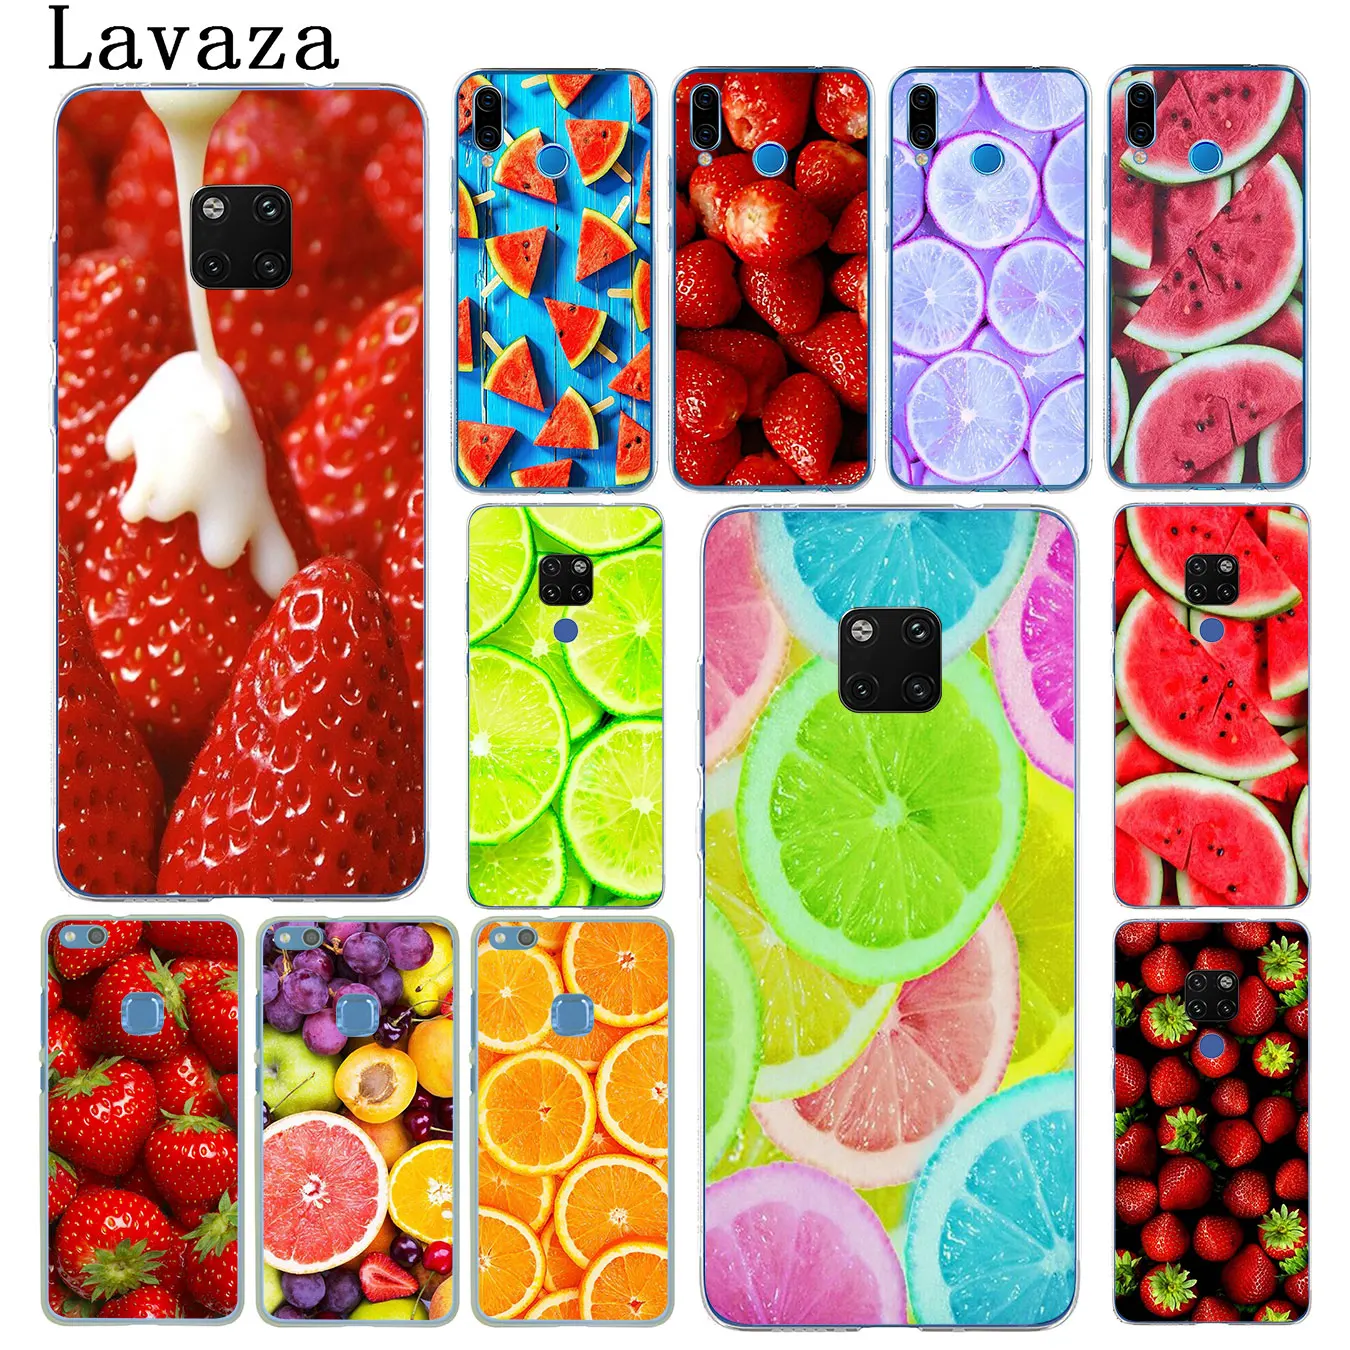 Lavaza Strawberry orange watermelon Fruits Phone Case for Huawei Mate 30 10 20 Pro Lite Nova 5I 4 3i 3 2i 2 Y6 Prime Cover | Мобильные